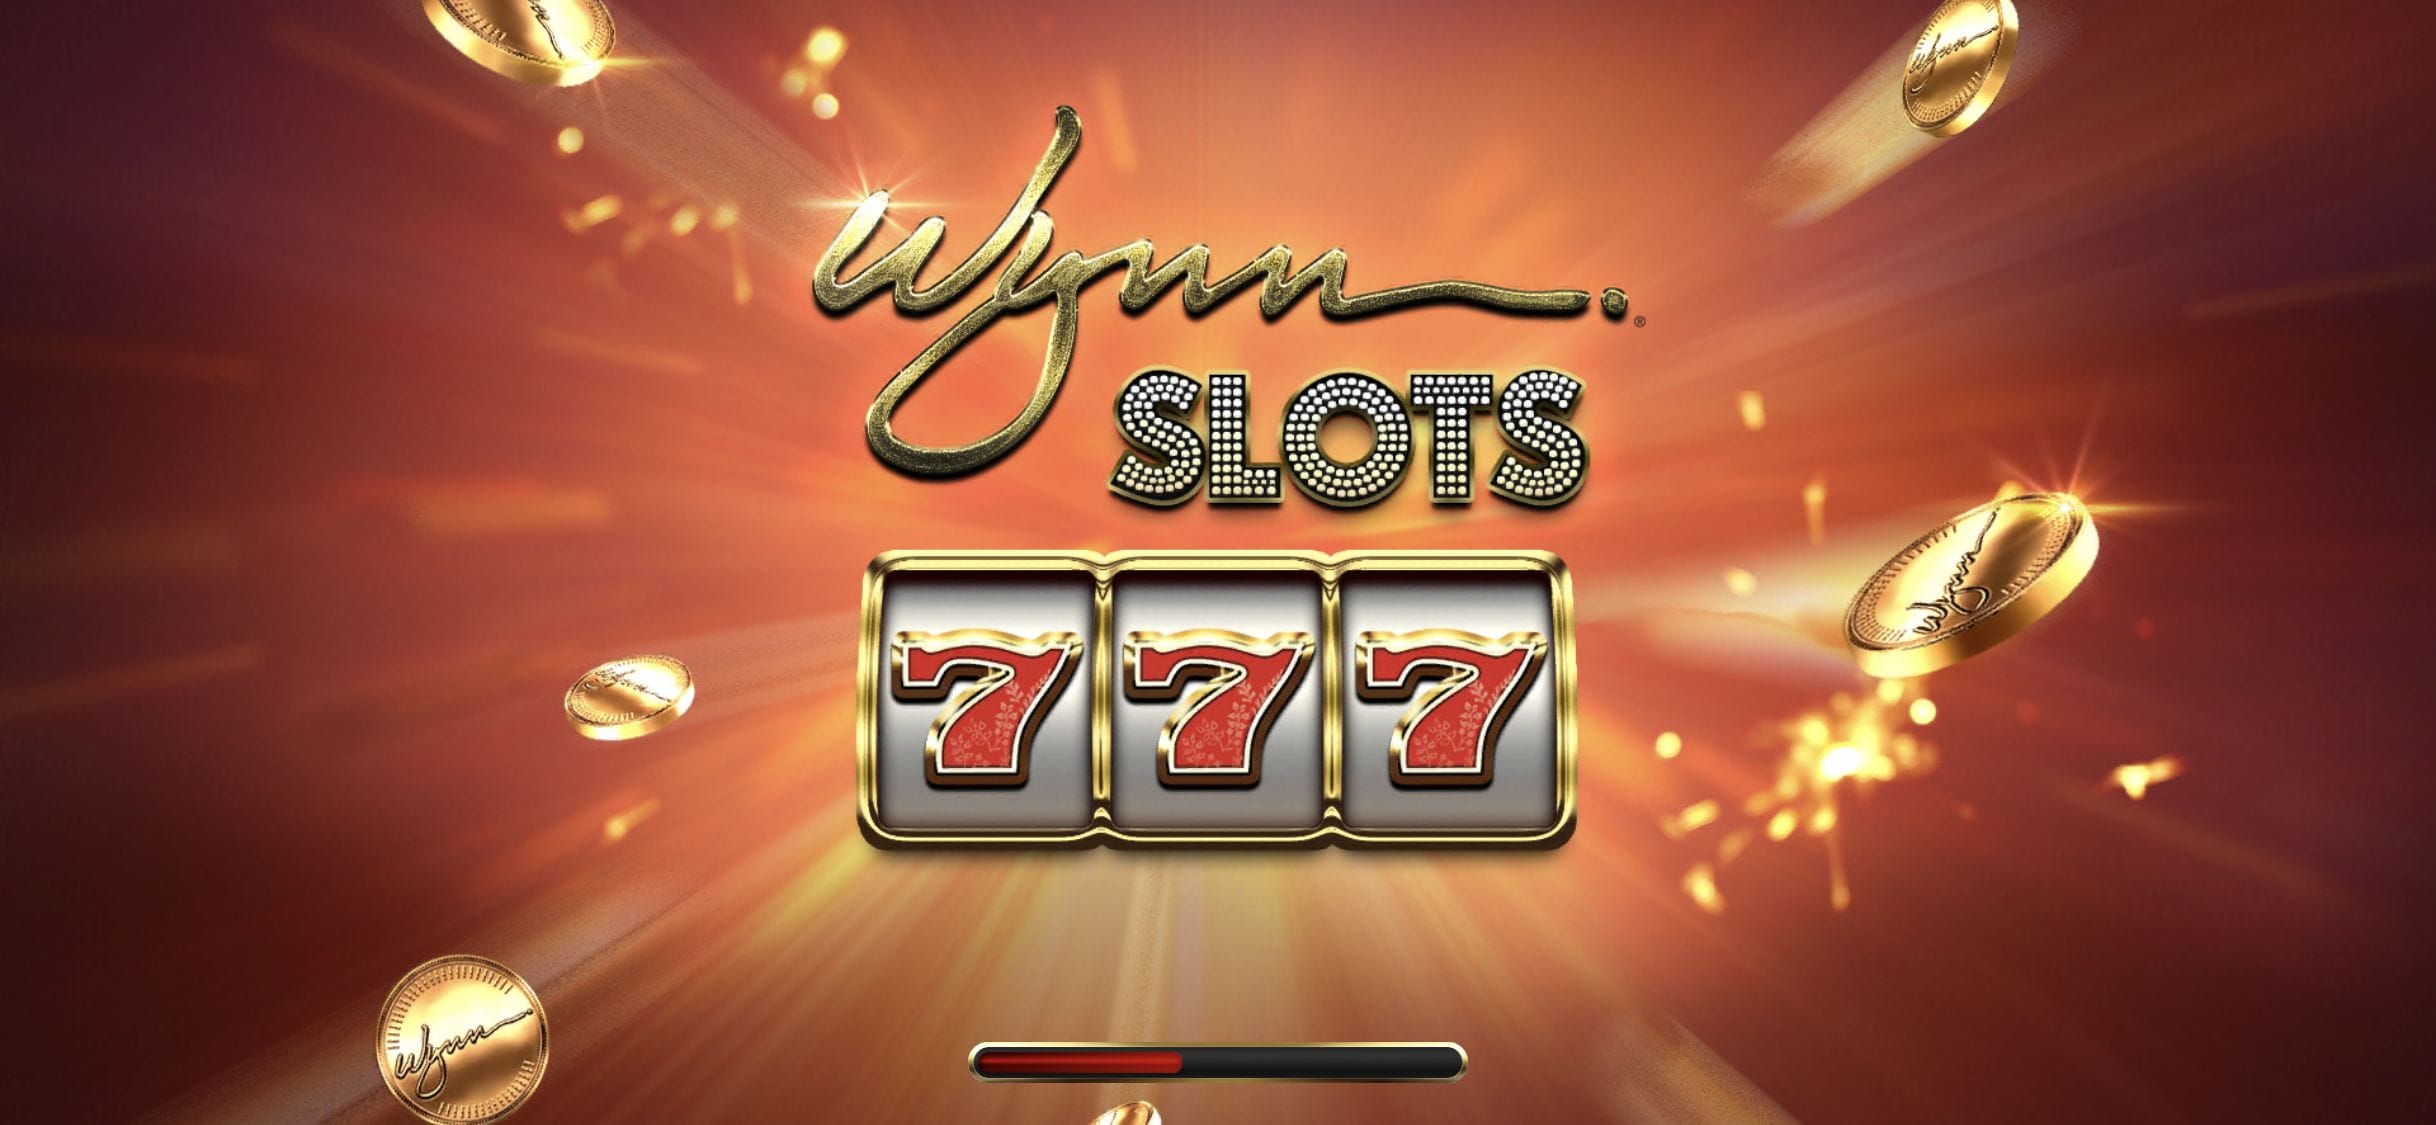 Wynn Slots App Launches Buffet Reward Know Your Slots